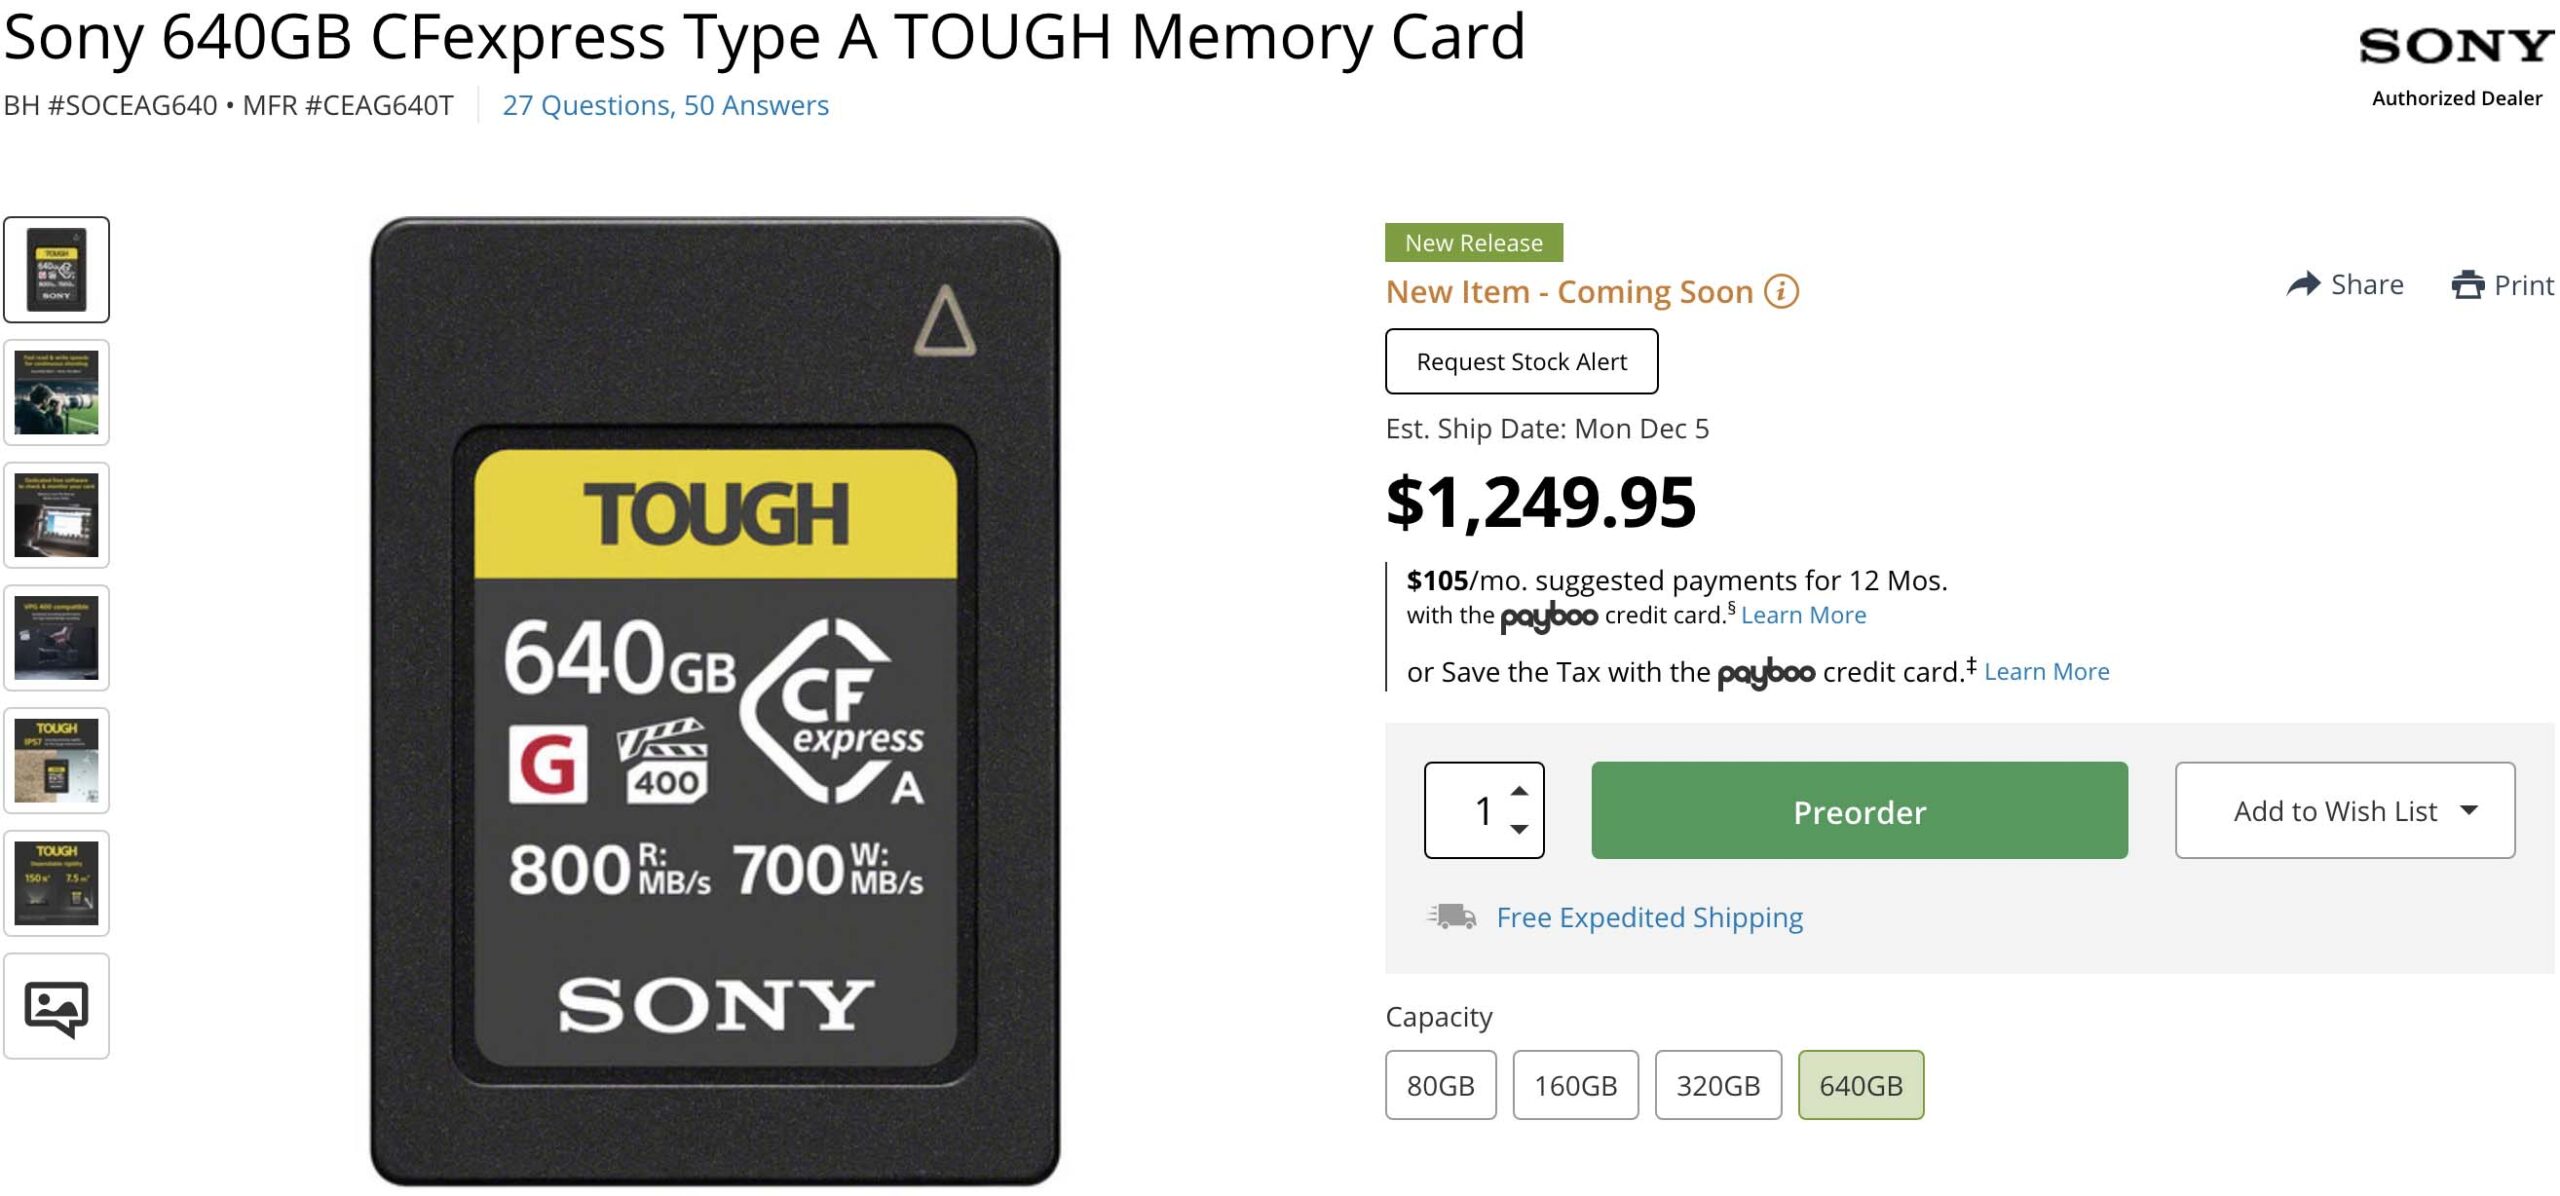 Sony 640GB & 320GB CFexpress Type A Tough Memory Card